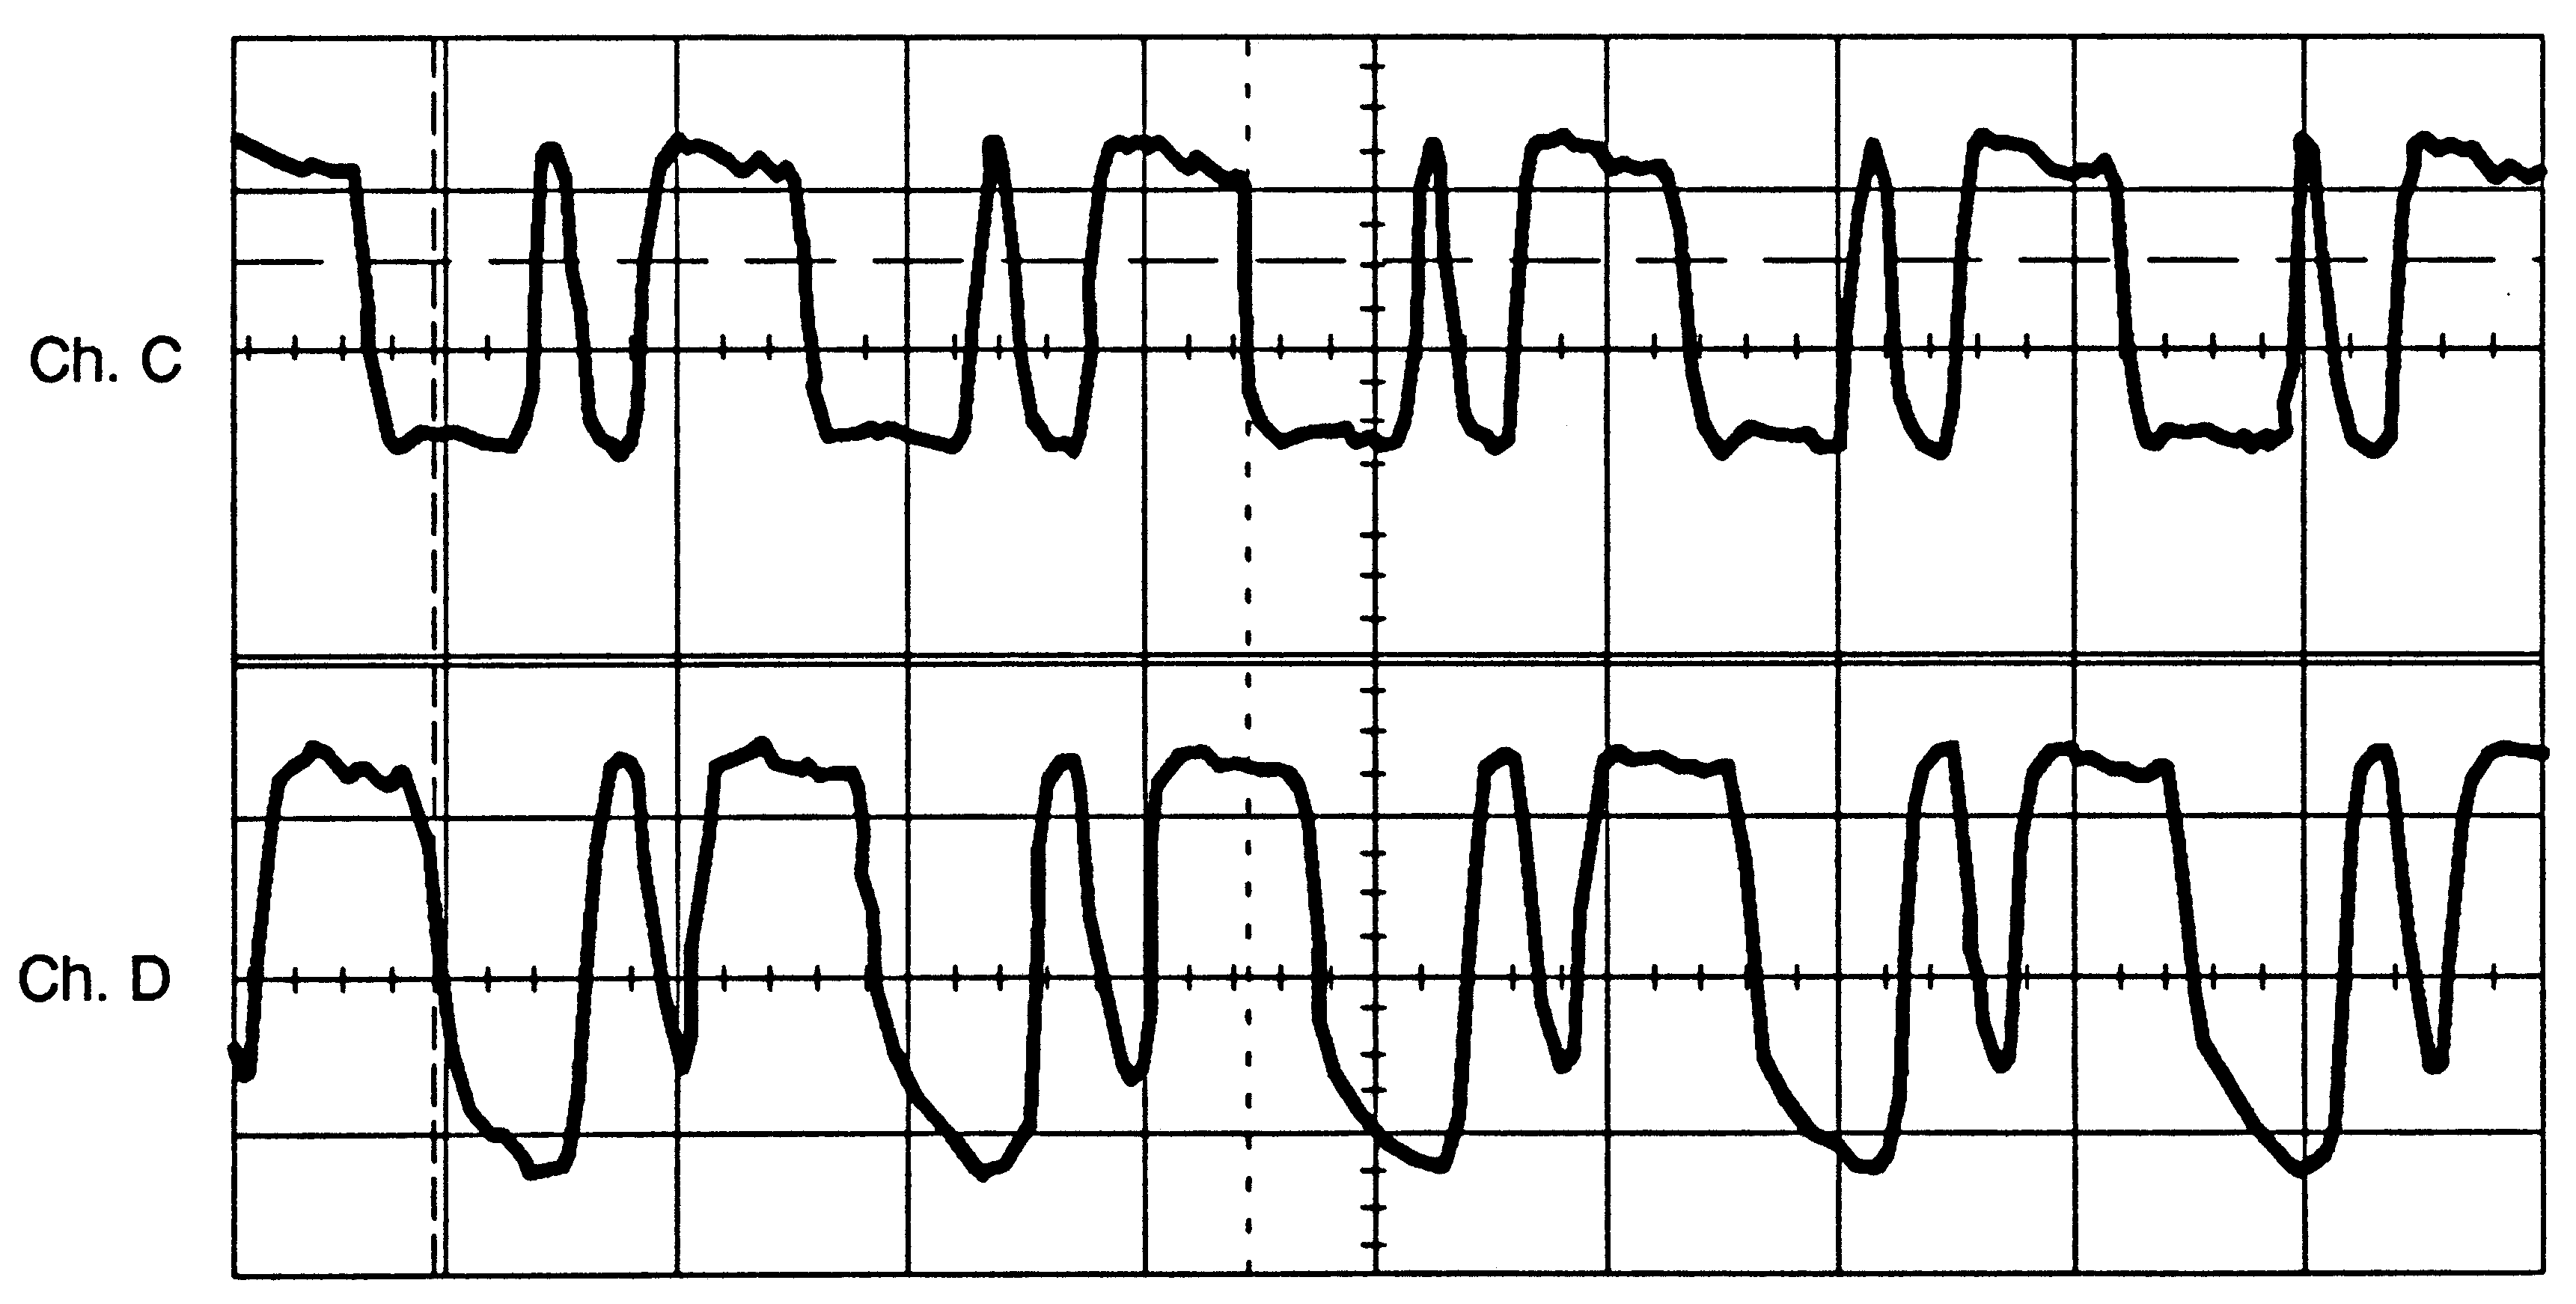 TTL signals
Ch.C/CH.D corresponding to figure 11